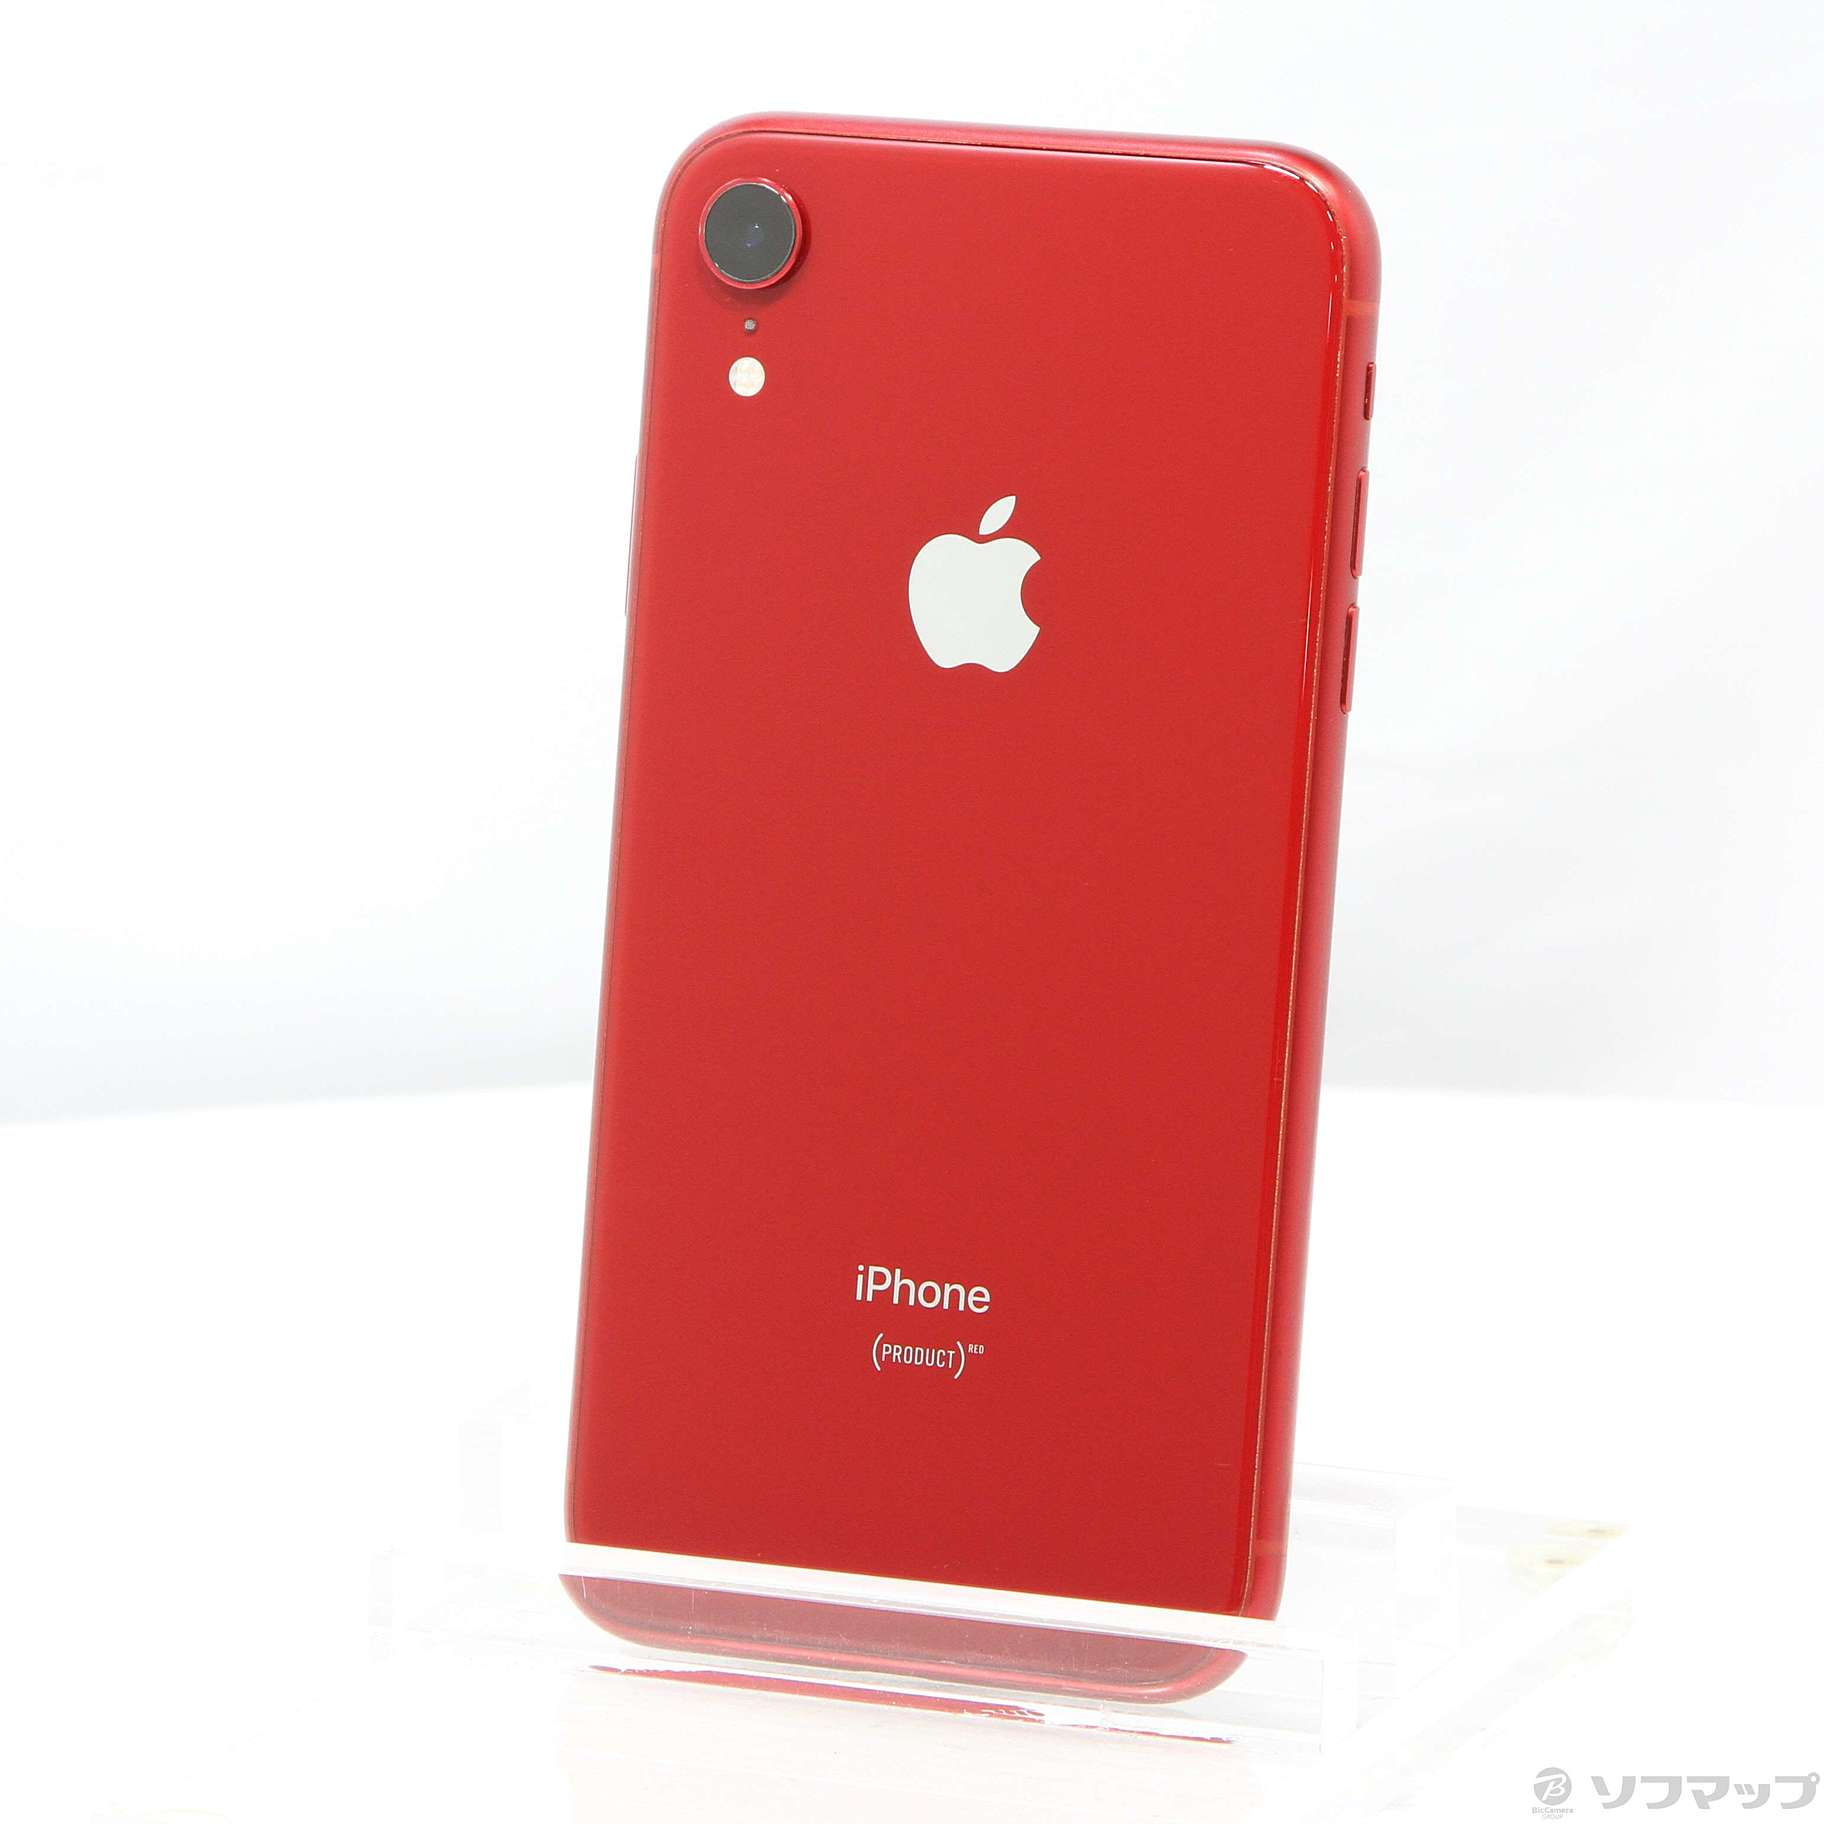 iPhone XR 256GB Product RED SIMフリー - スマートフォン本体